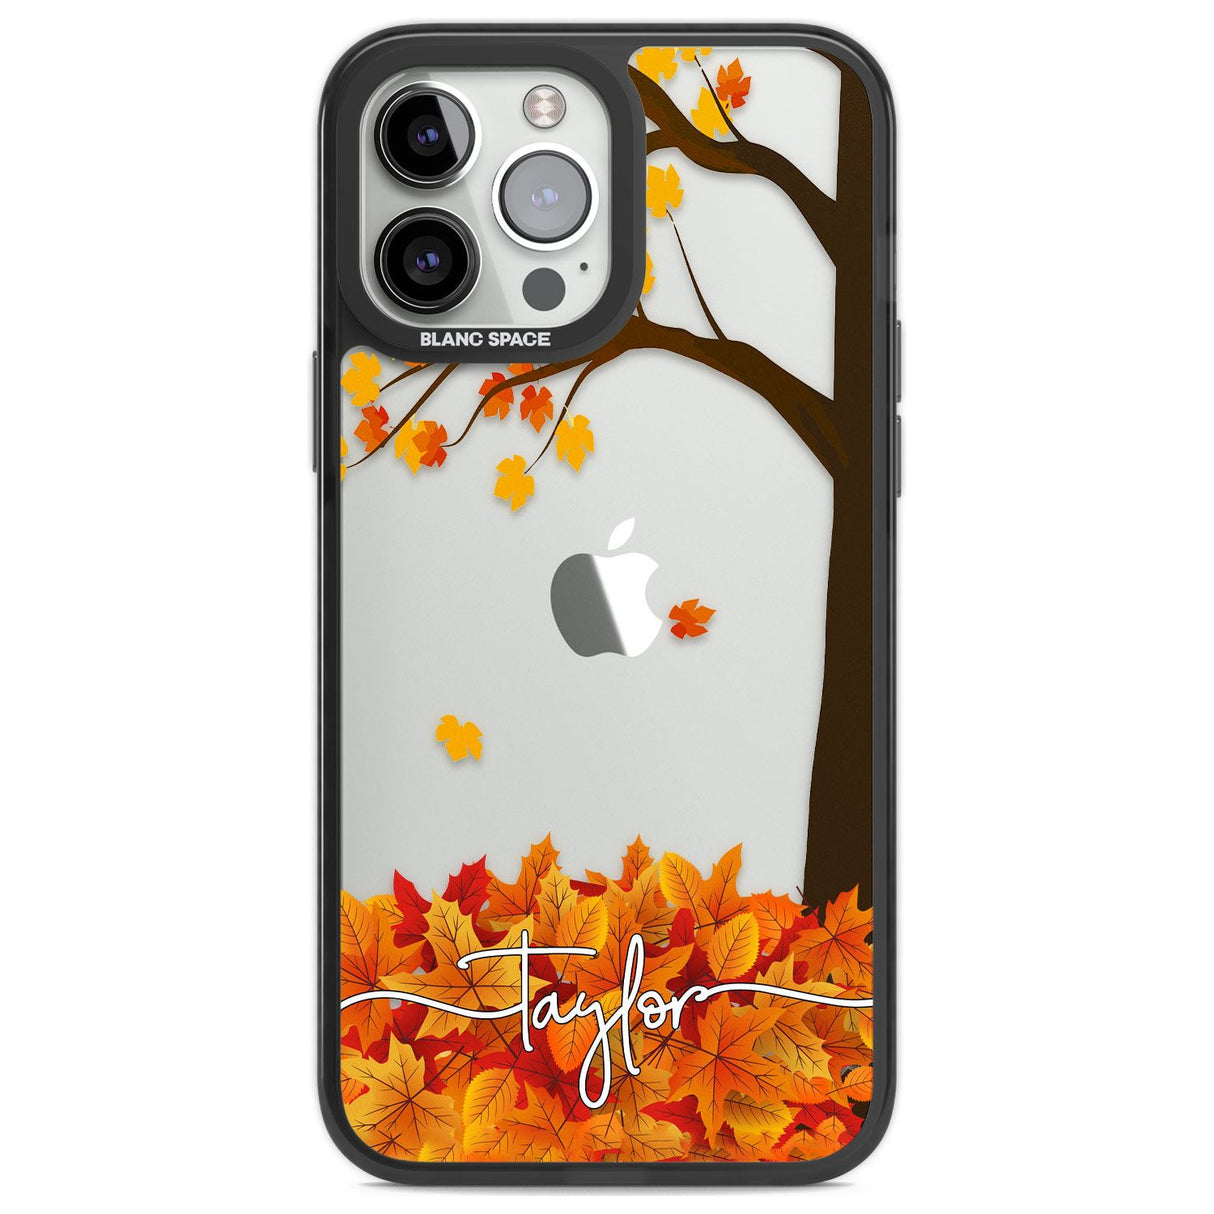 Personalised Autumn Leaves Custom Phone Case iPhone 13 Pro Max / Black Impact Case,iPhone 14 Pro Max / Black Impact Case Blanc Space